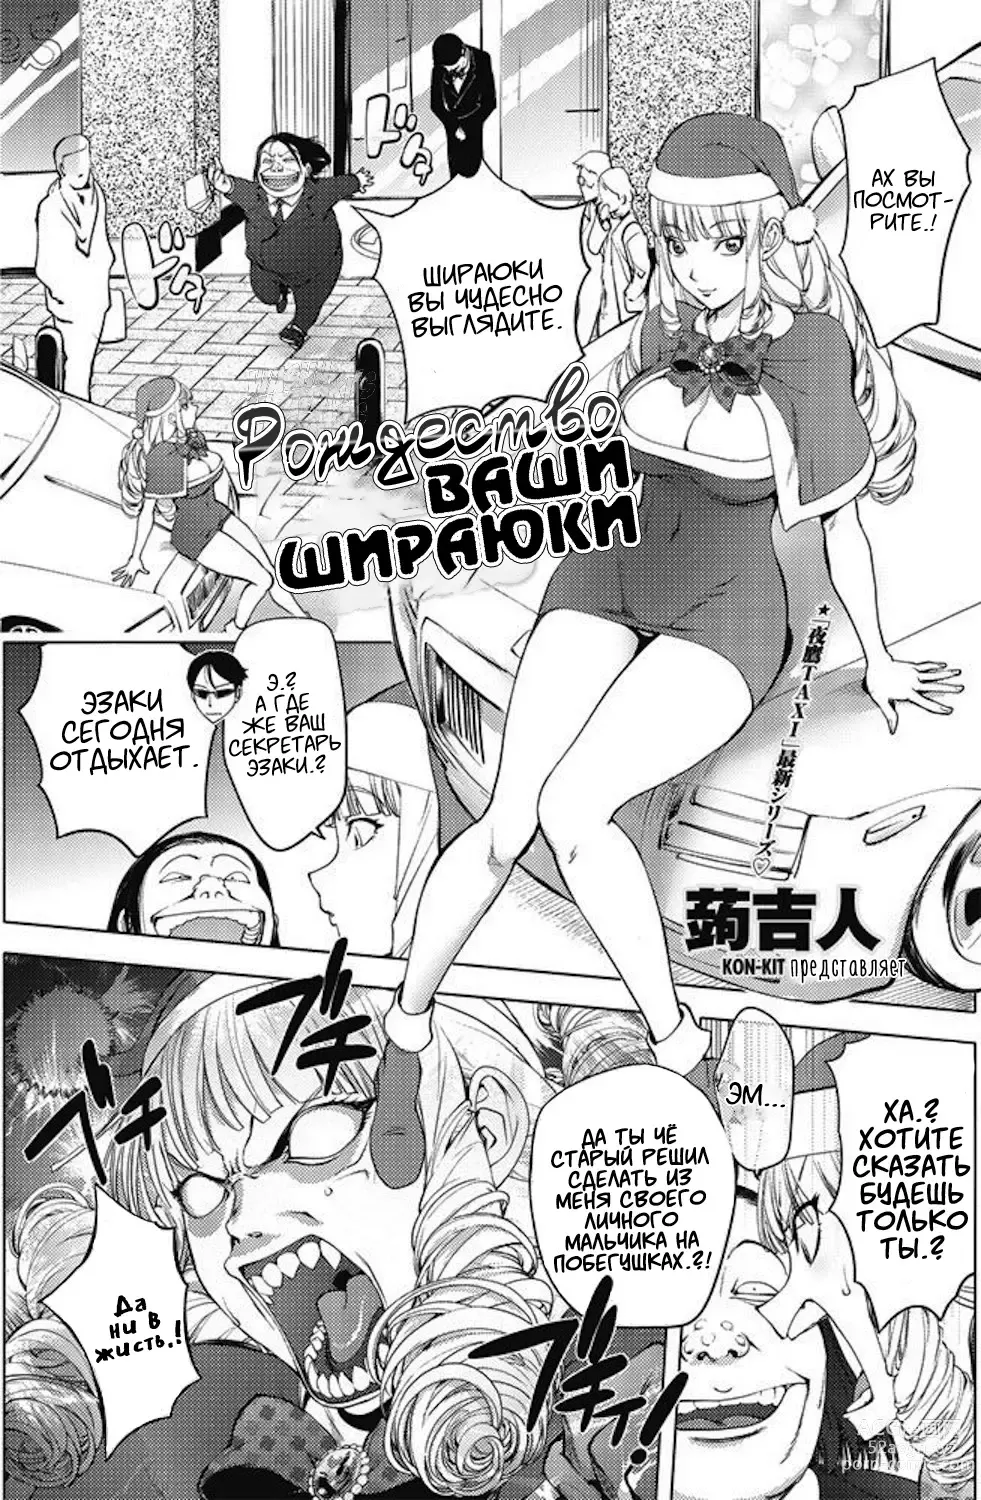 Page 1 of manga Рождество Ваши Шираюки